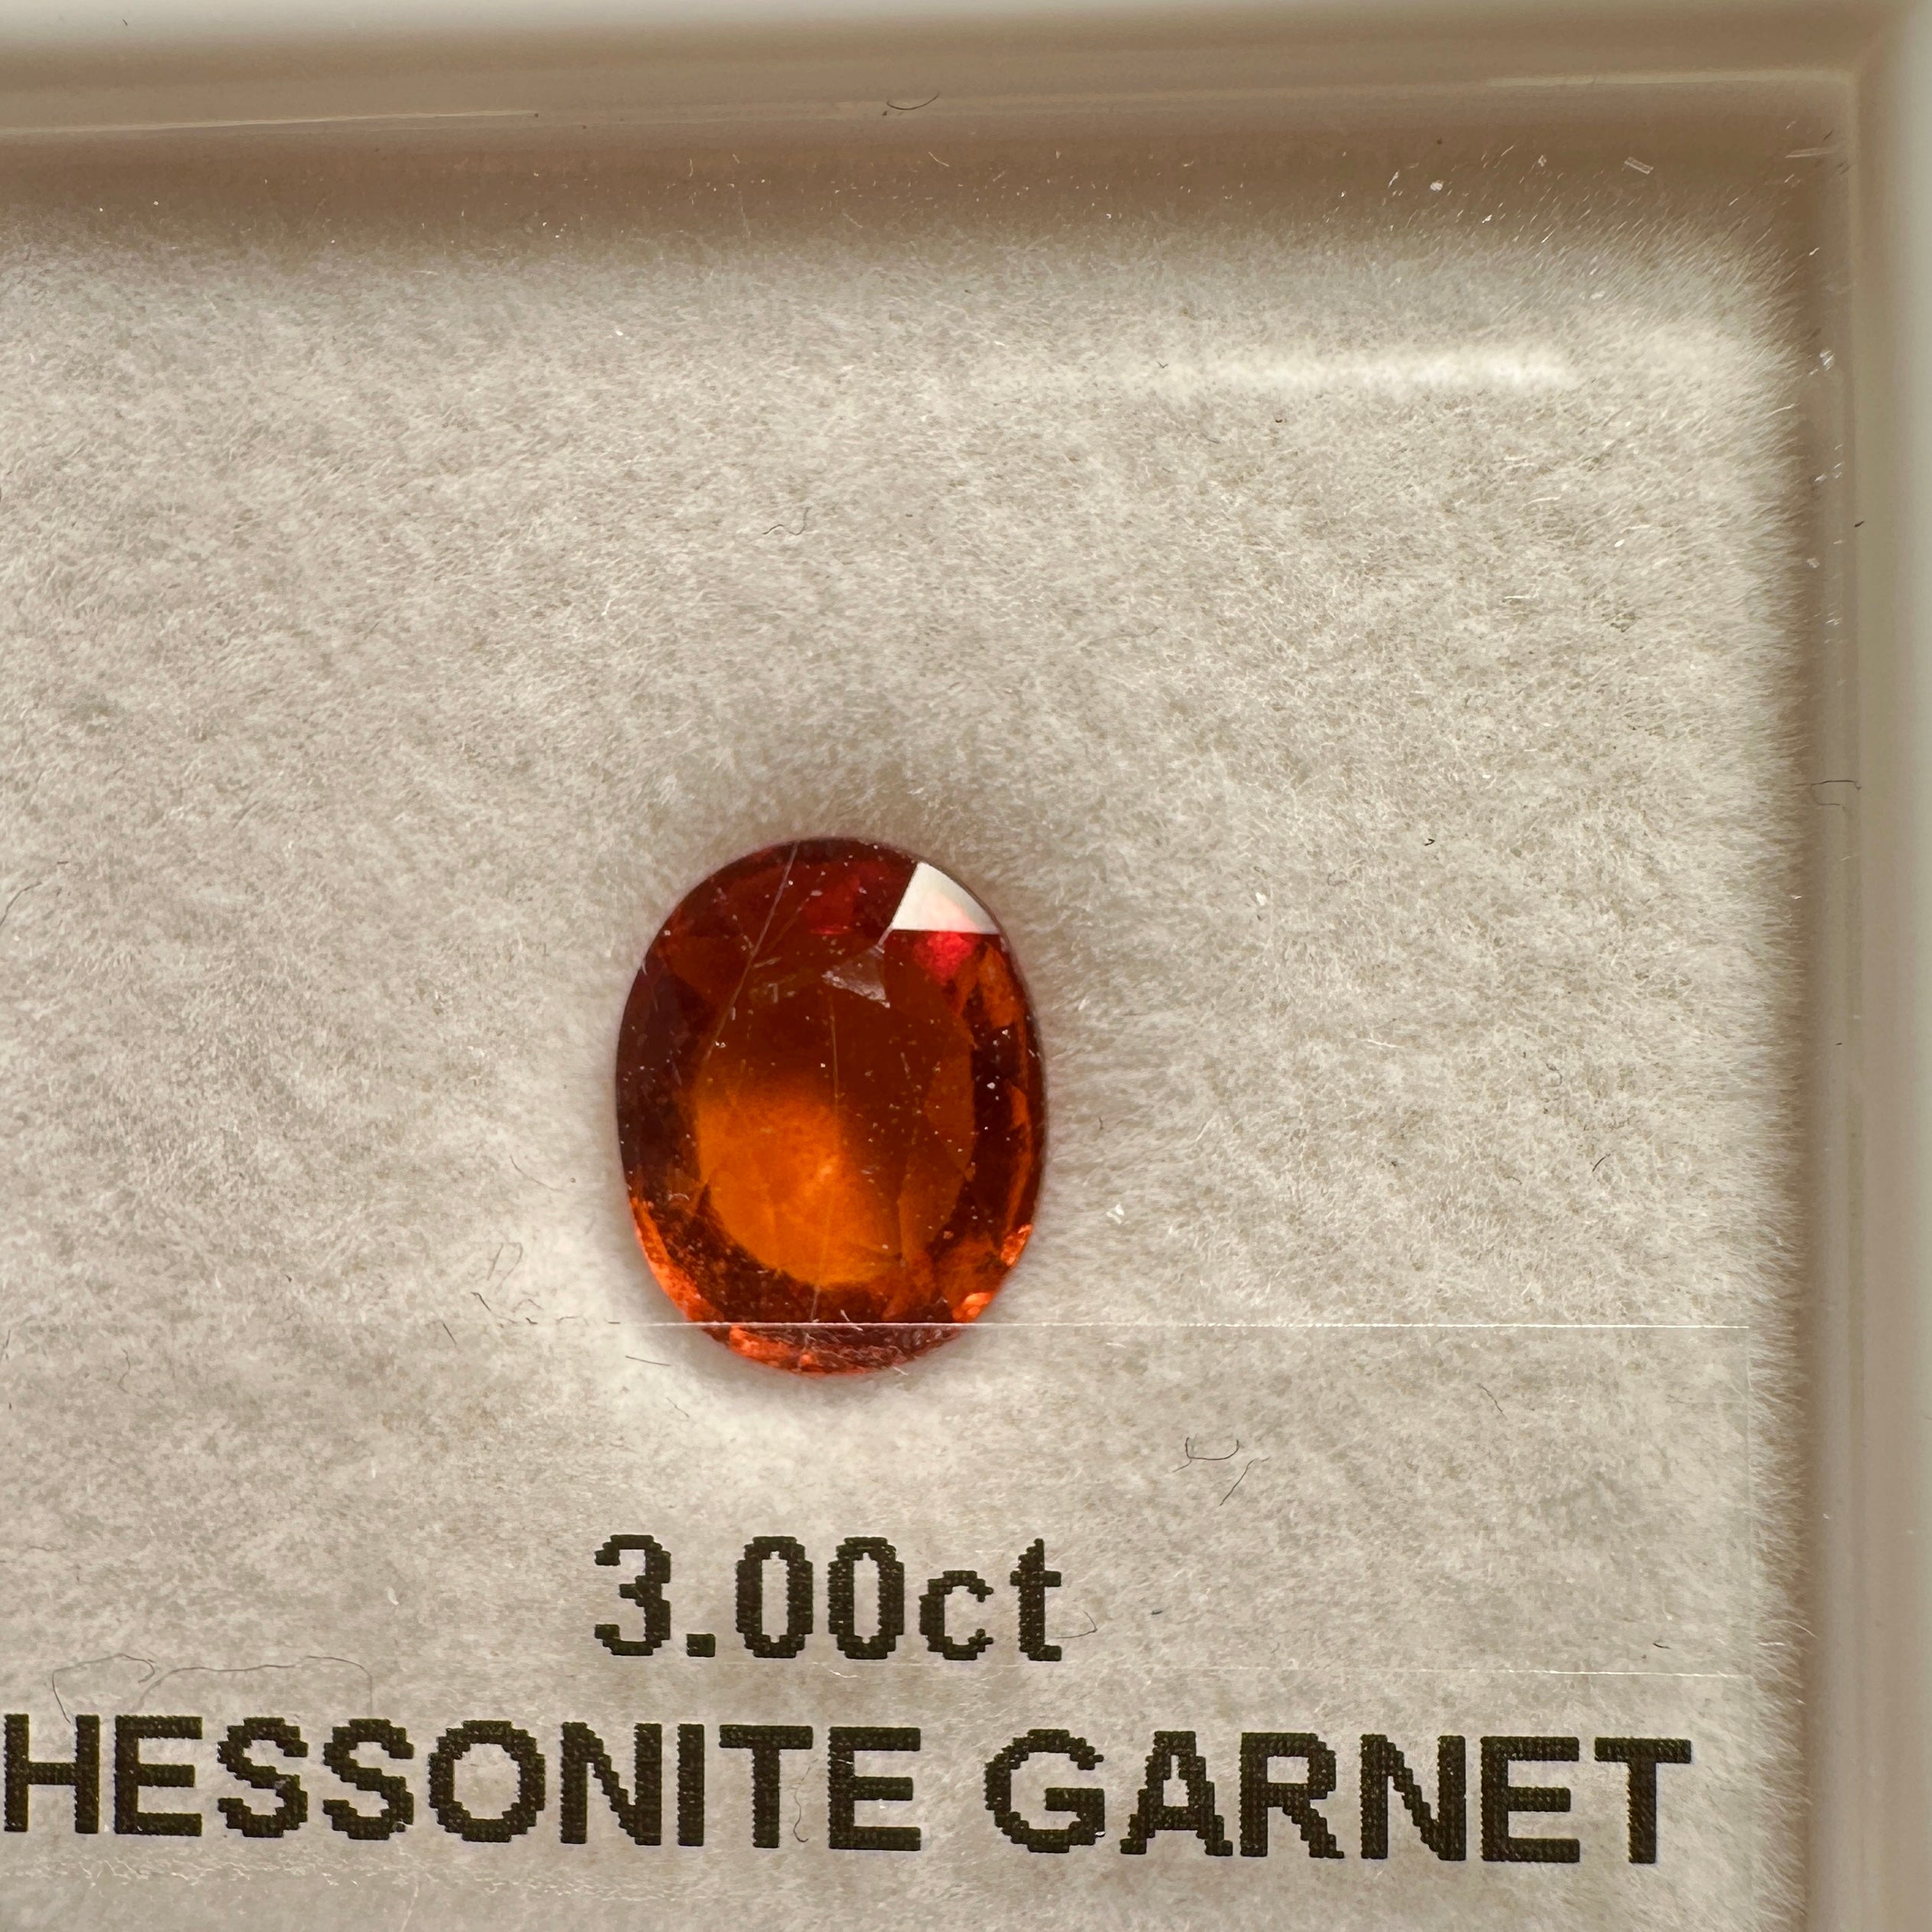 3.00ct Hessonite Garnet, Untreated Unheated, native cut